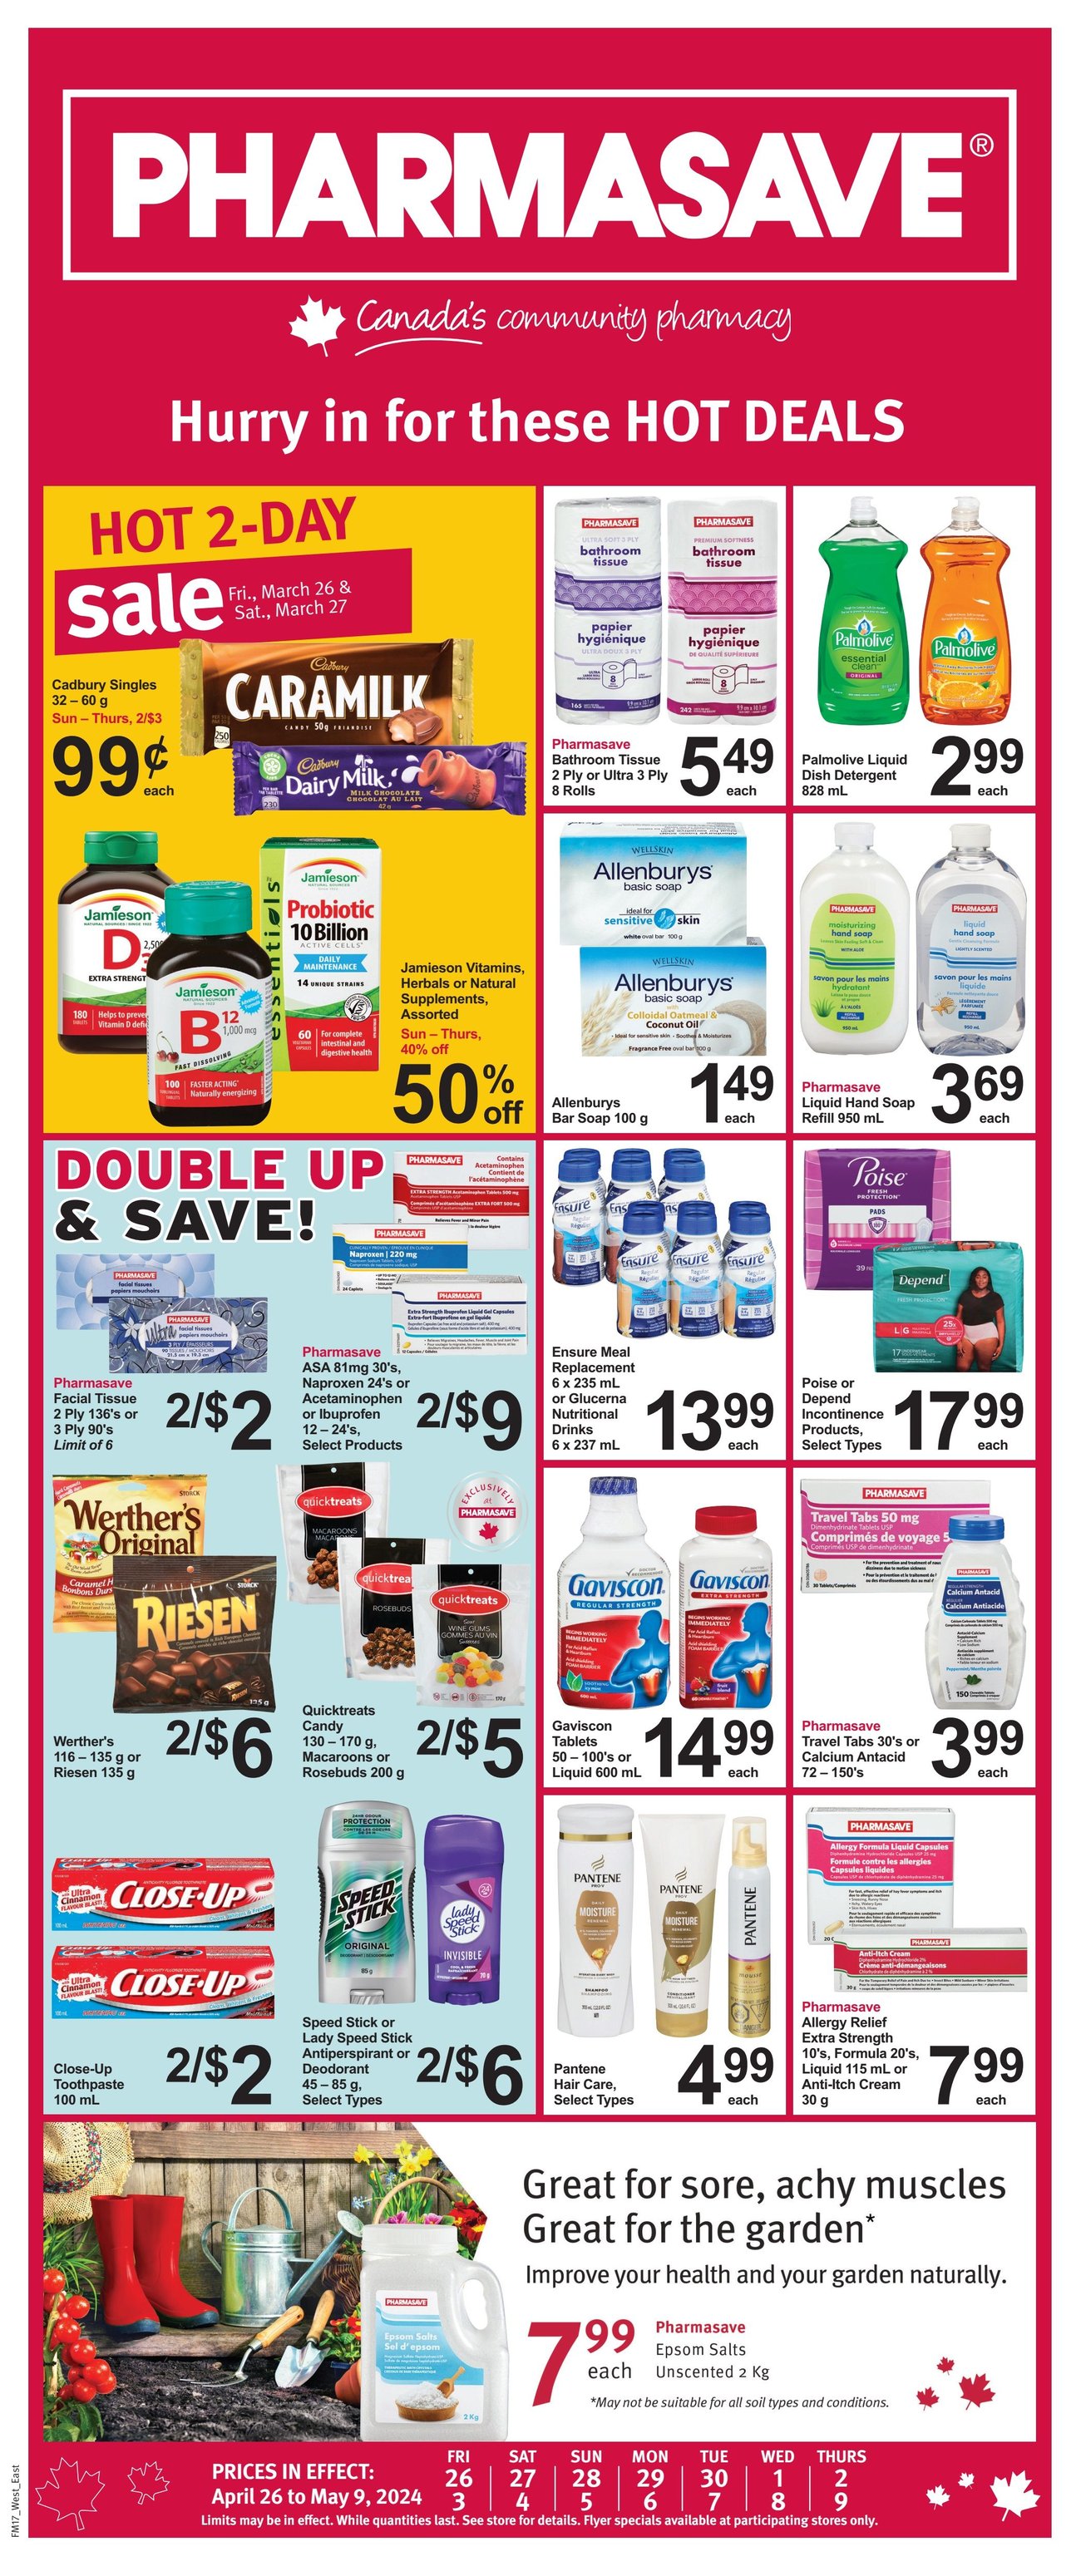 Pharmasave - Ontario and Western Canada - 2 Weeks of Savings - Page 1